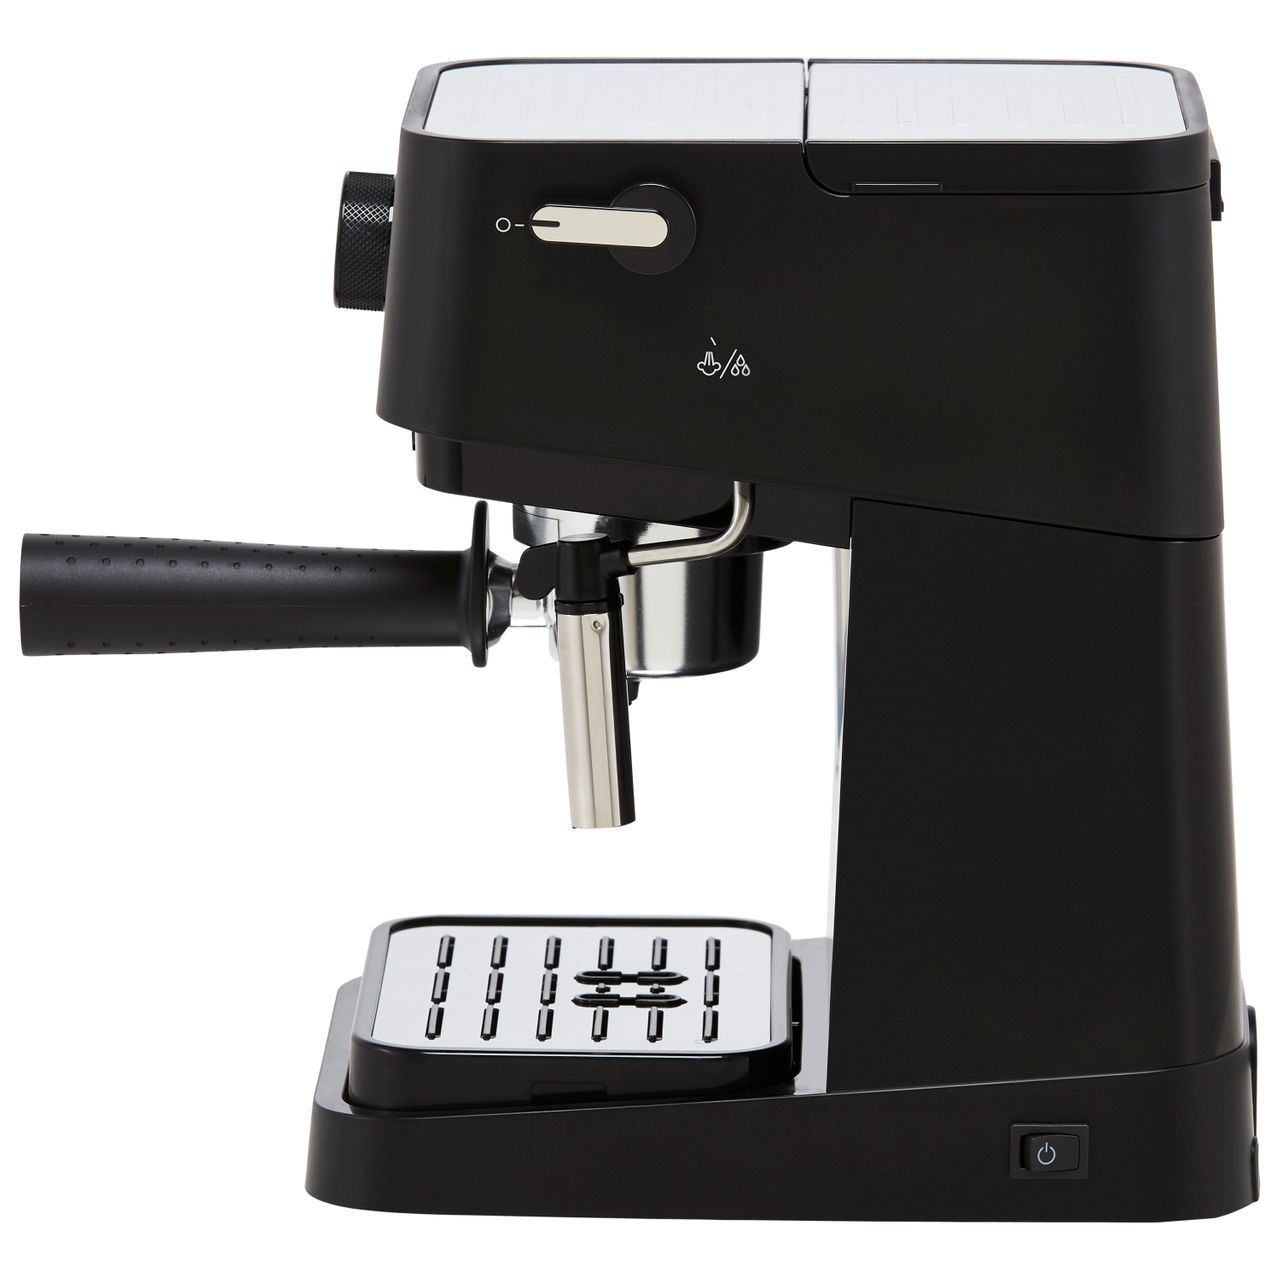  De'Longhi Stilosa EC260.BK, Traditional barista Pump Espresso  Coffee Machine, 2 cups, Black: Home & Kitchen